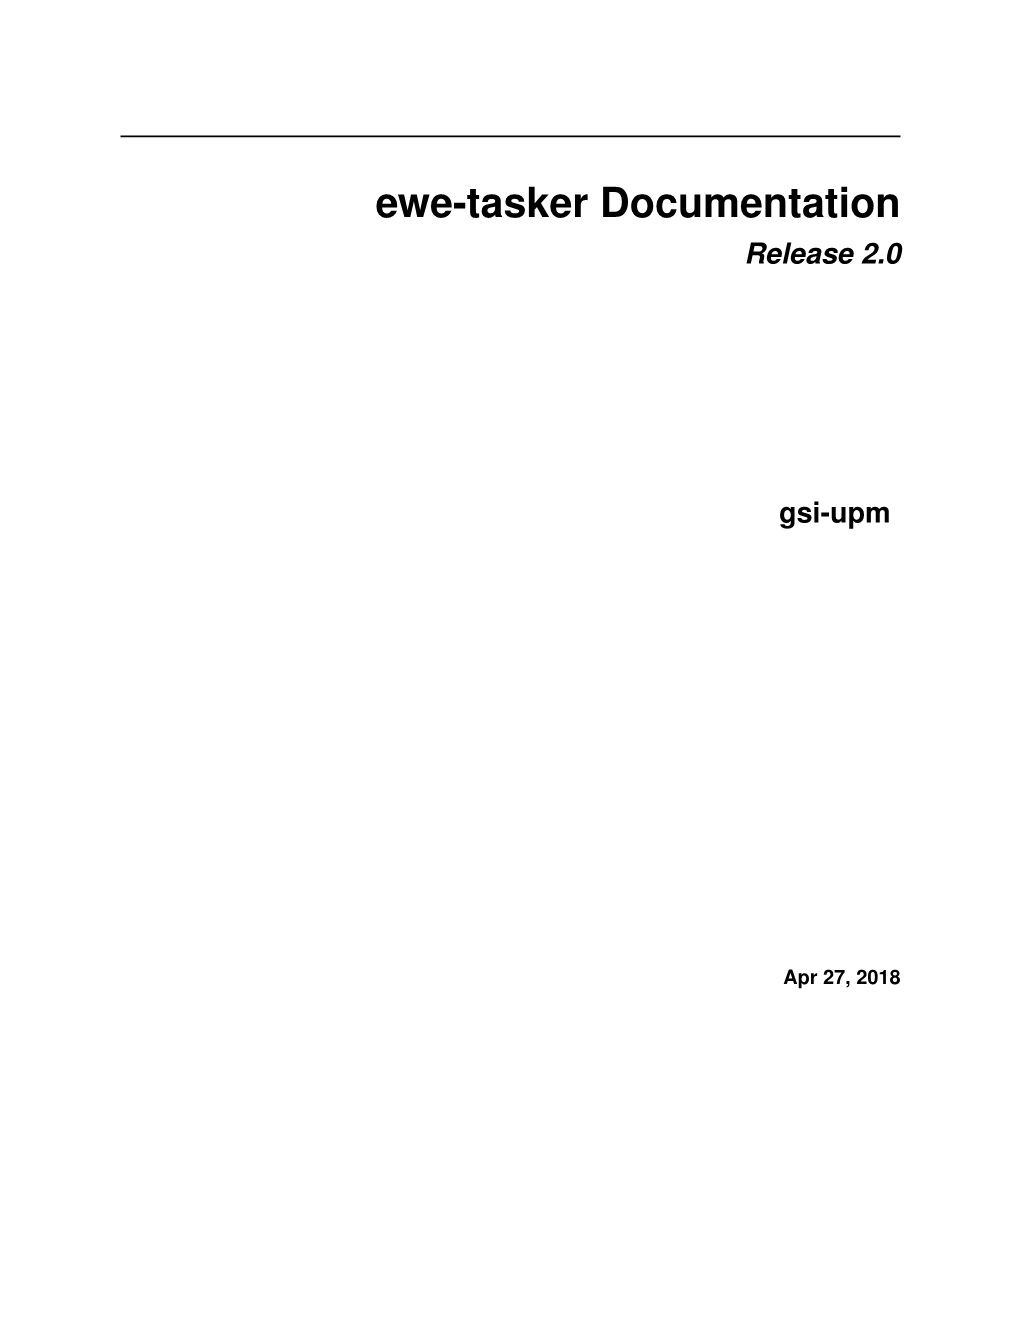 Ewe-Tasker Documentation Release 2.0